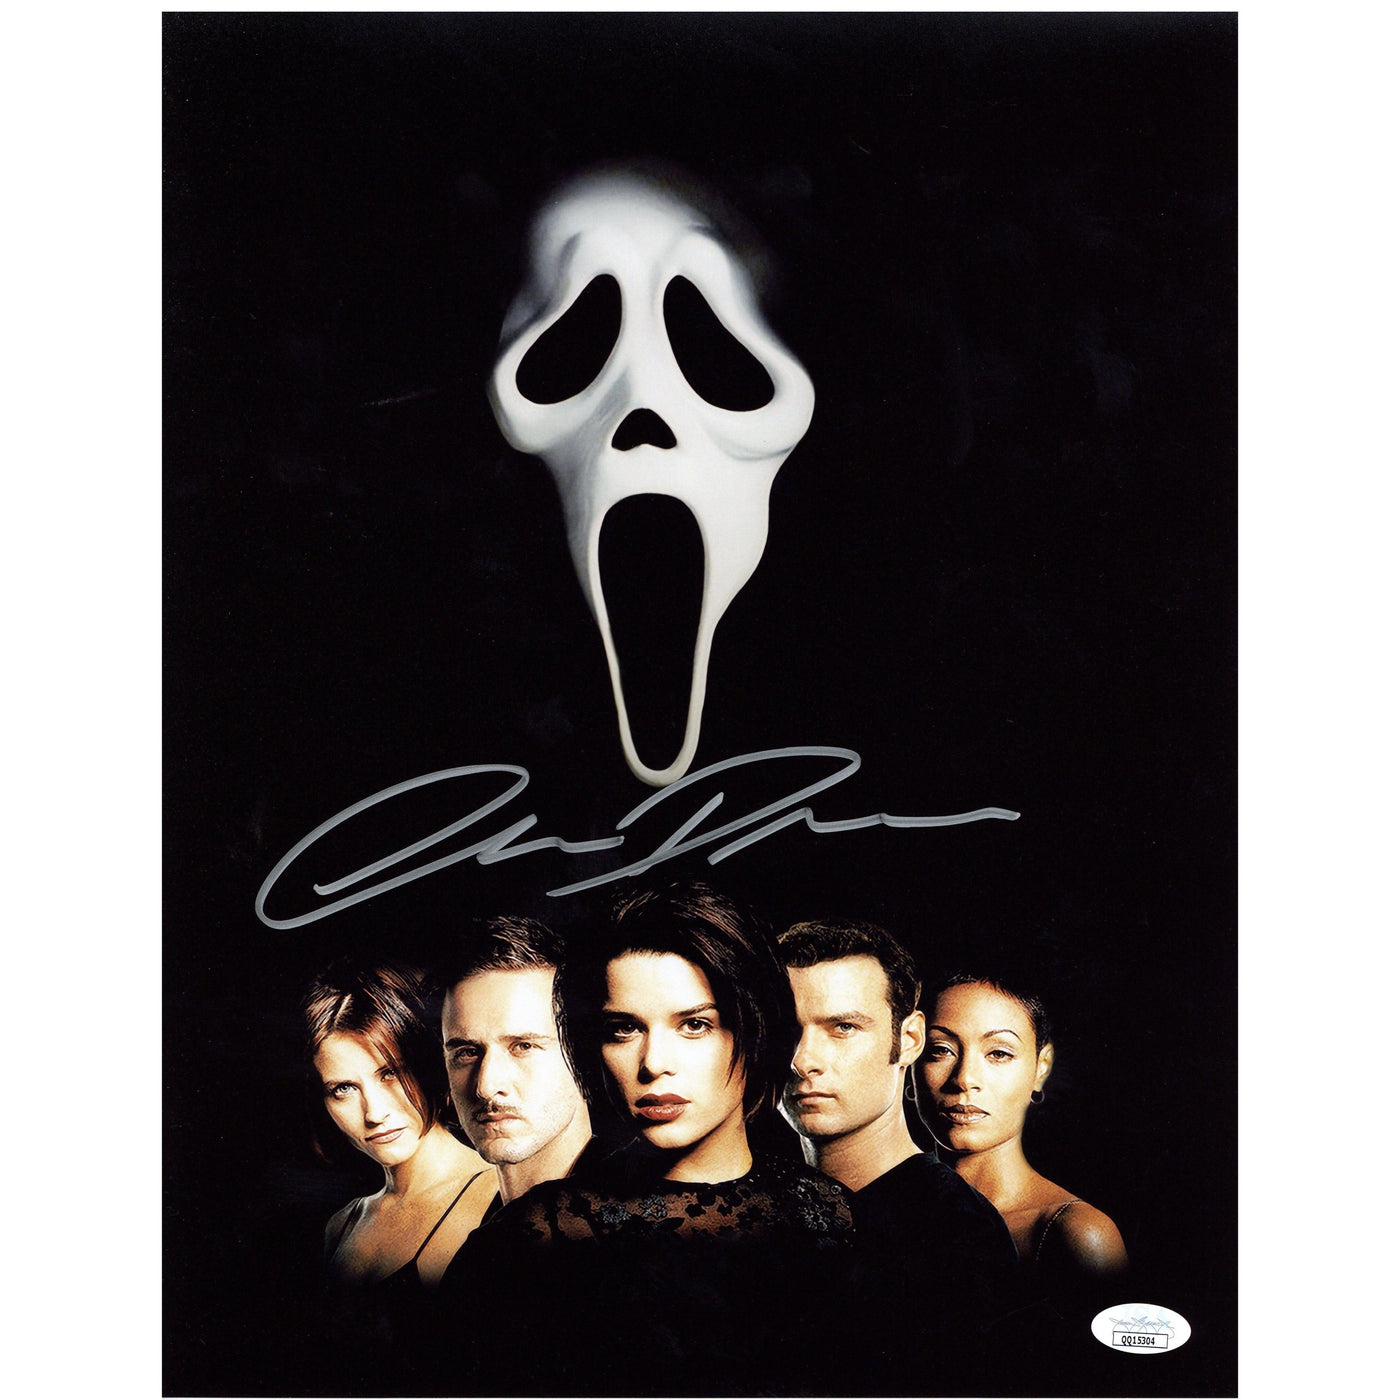 Chris Durand Signed 11x14 Photo Scream 2 Horror Autographed JSA COA 2